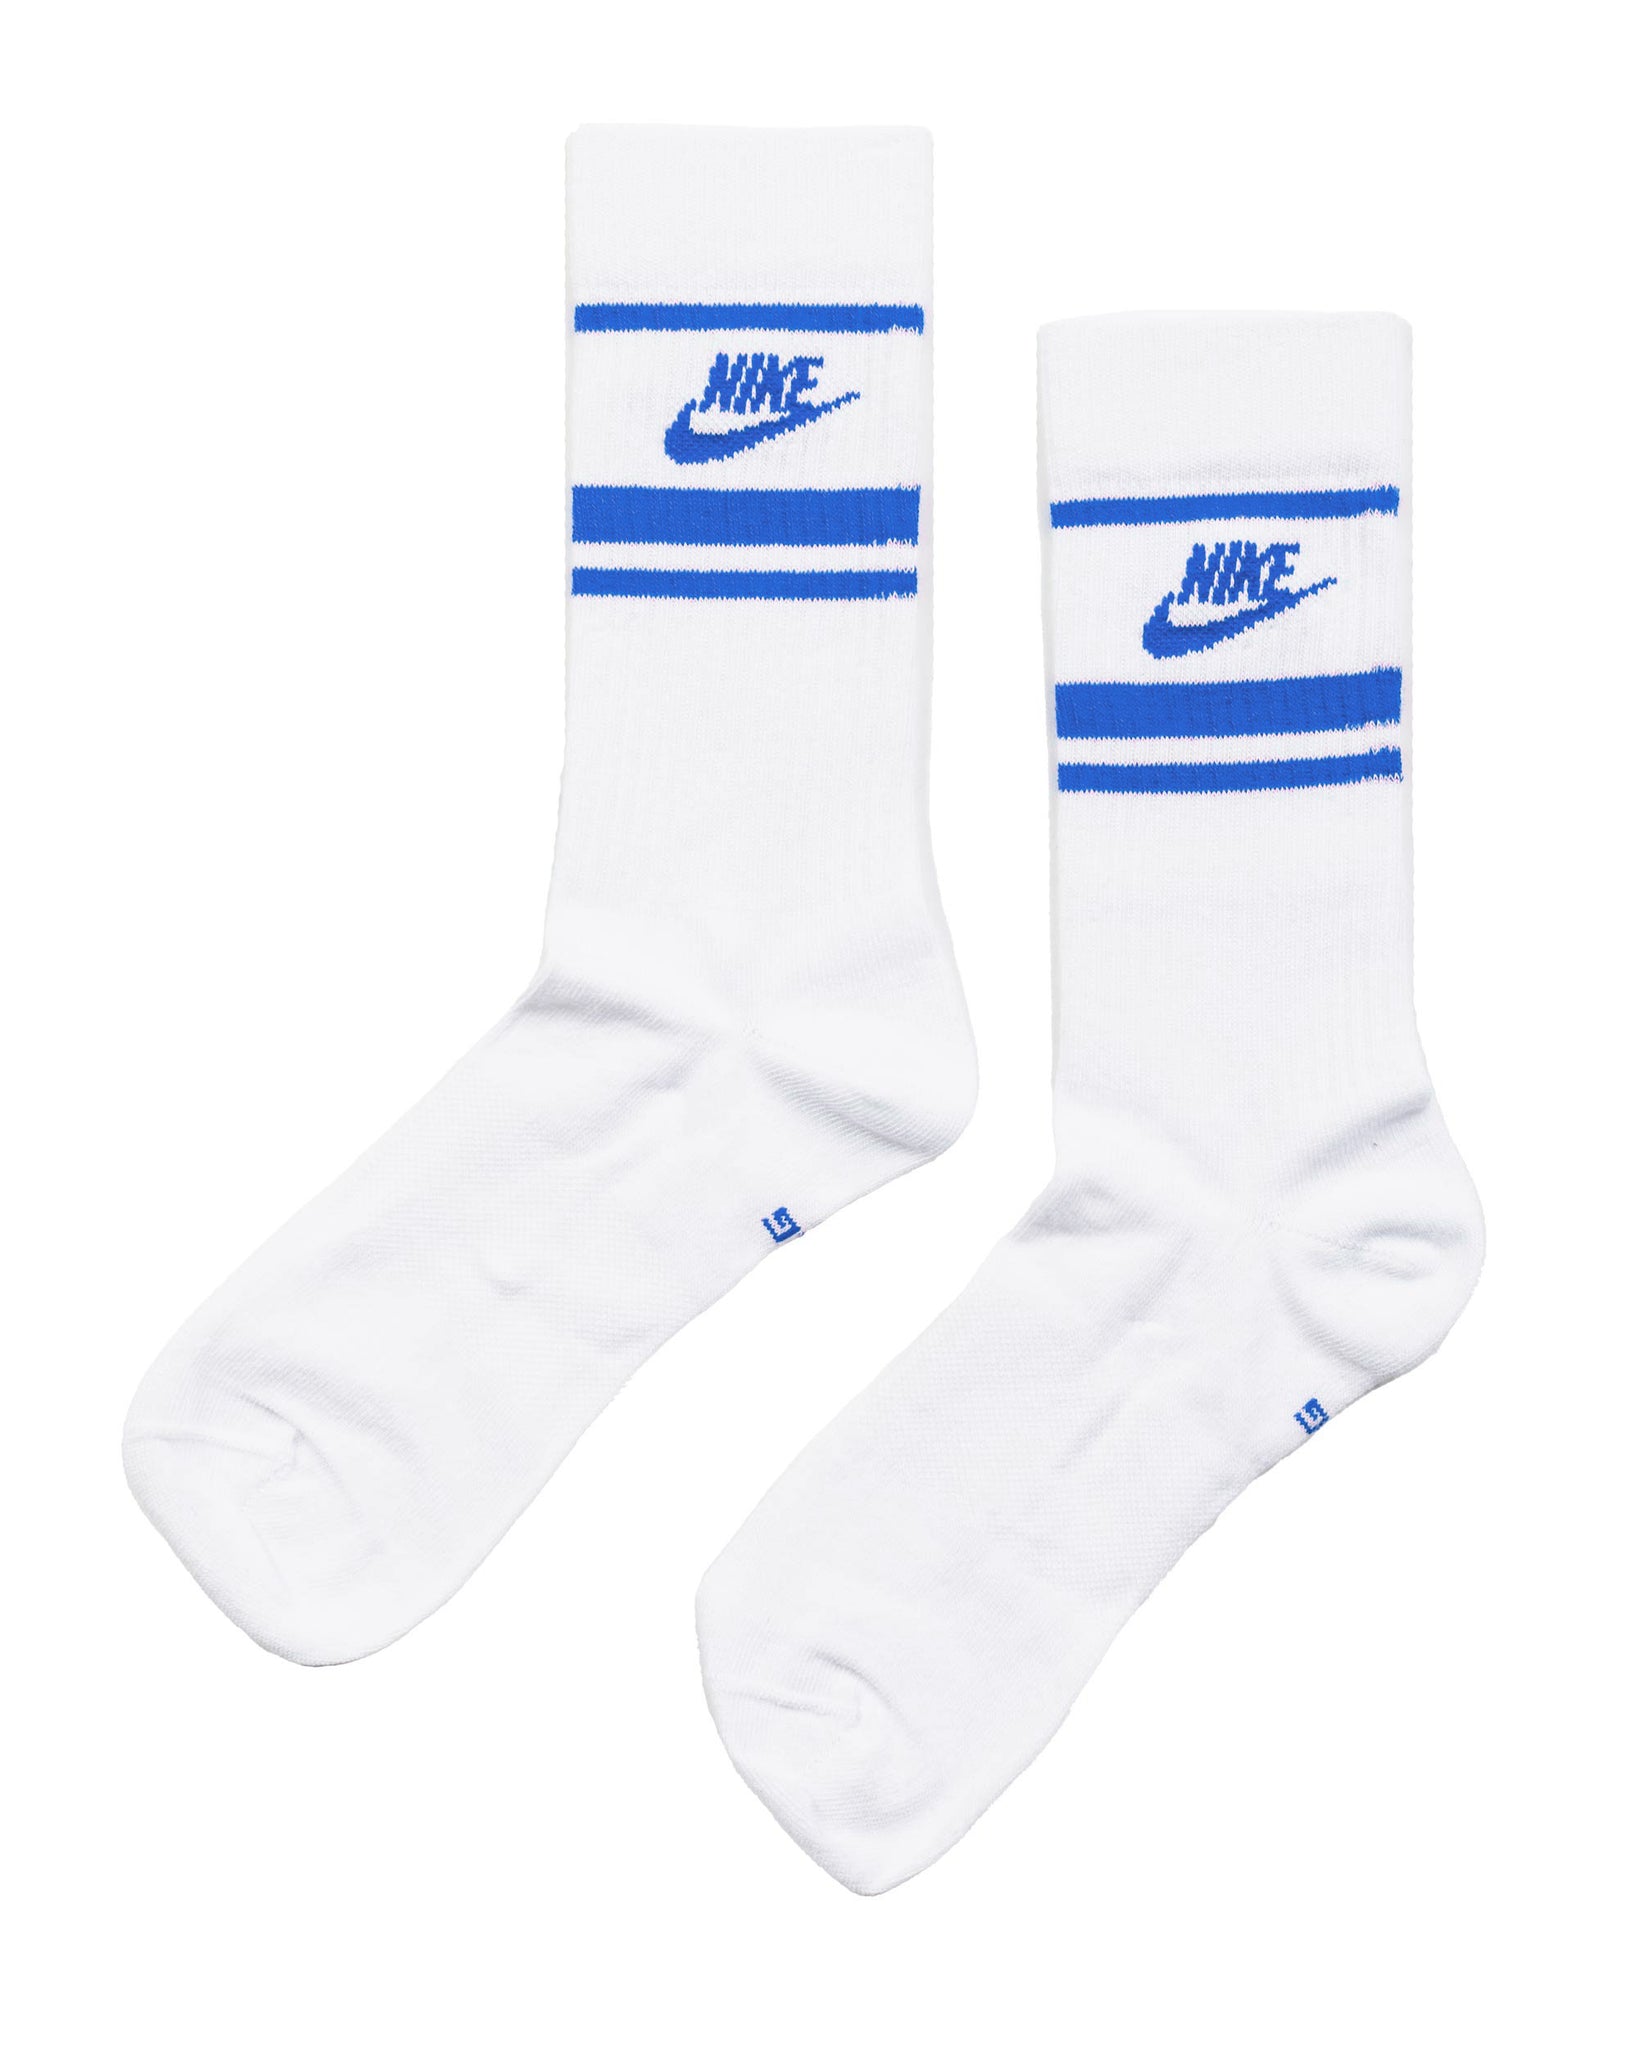 Nike Sportswear Everyday Essential Crew Socks White/Game Royal (3 Pack)